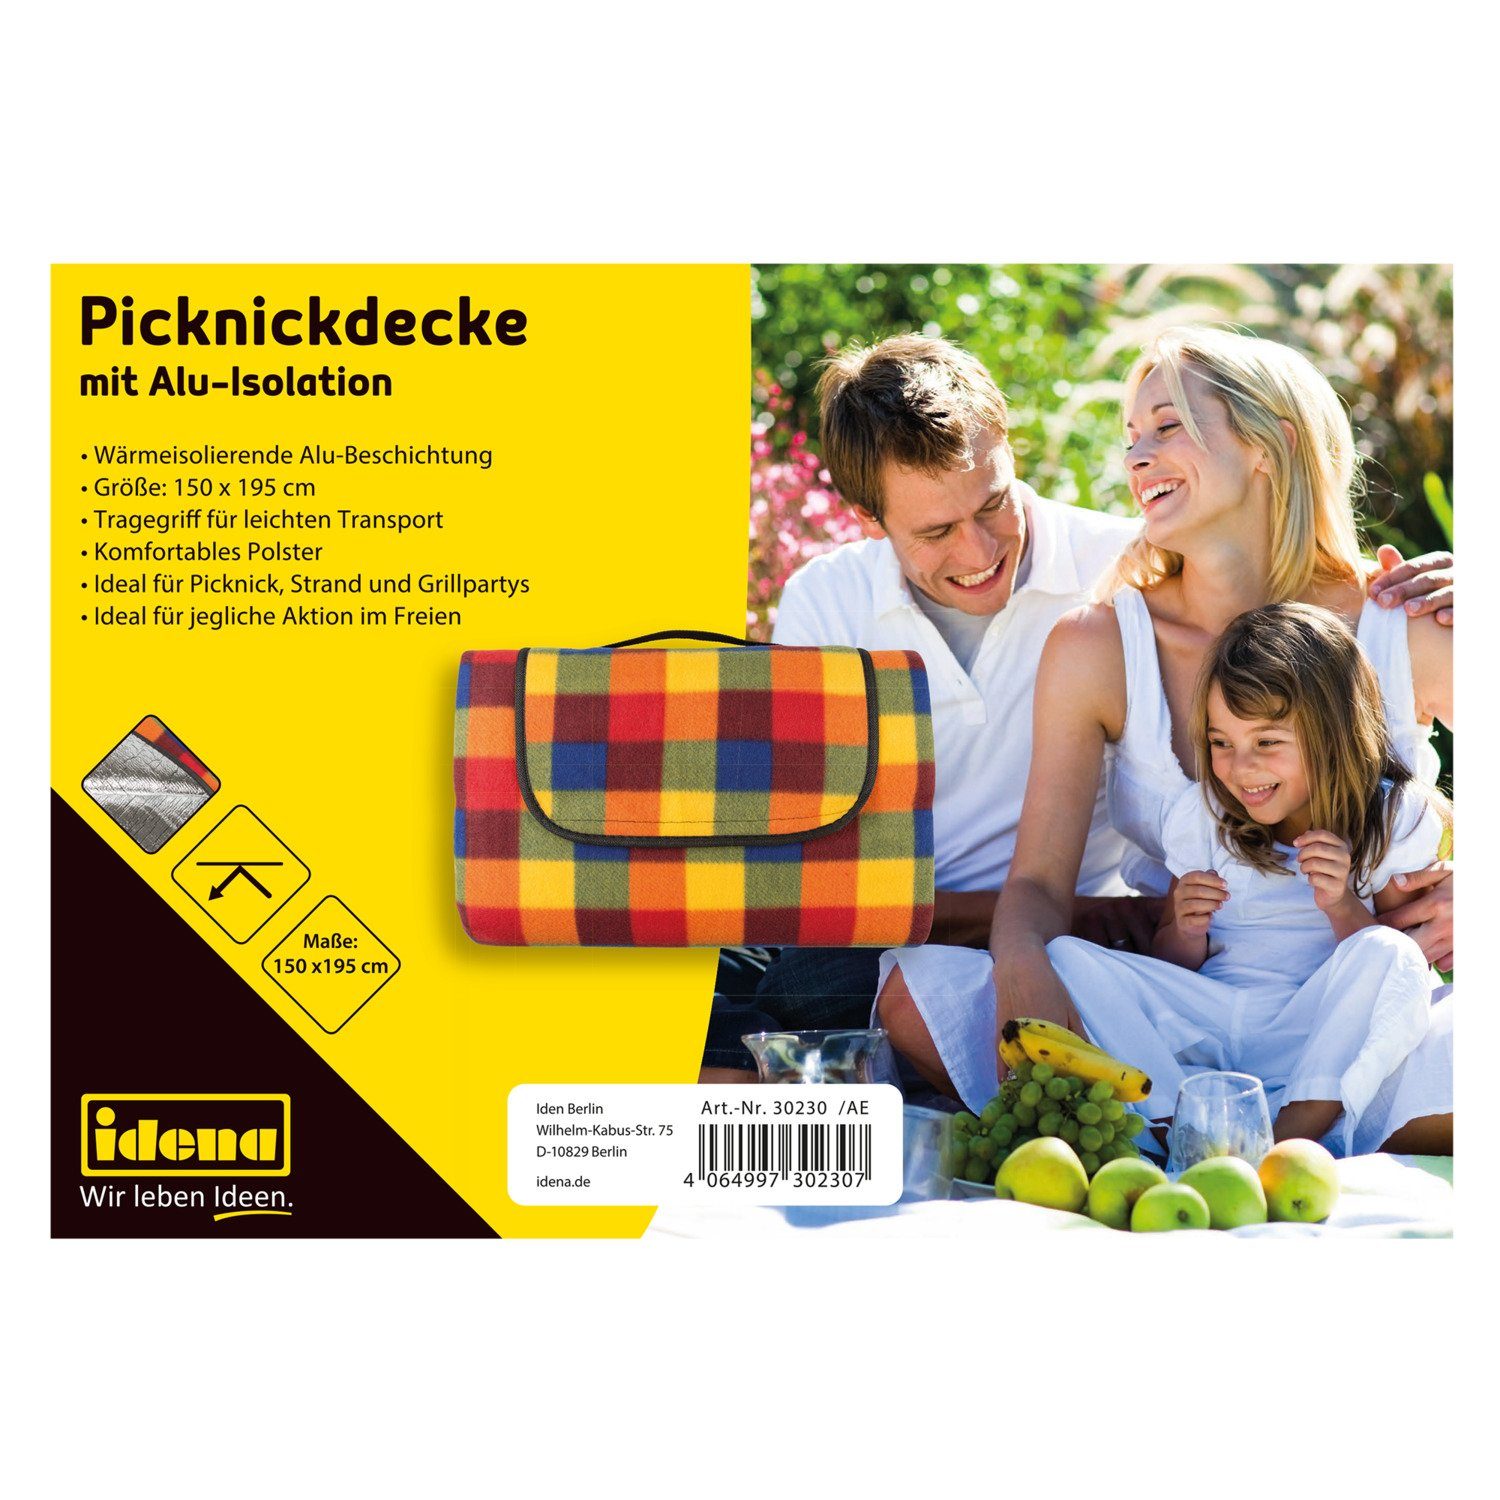 Picknickdecke Idena 30230 ca. 150 Idena 2 4 Perso, 195 groß, x cm bis Picknick-Decke, - für